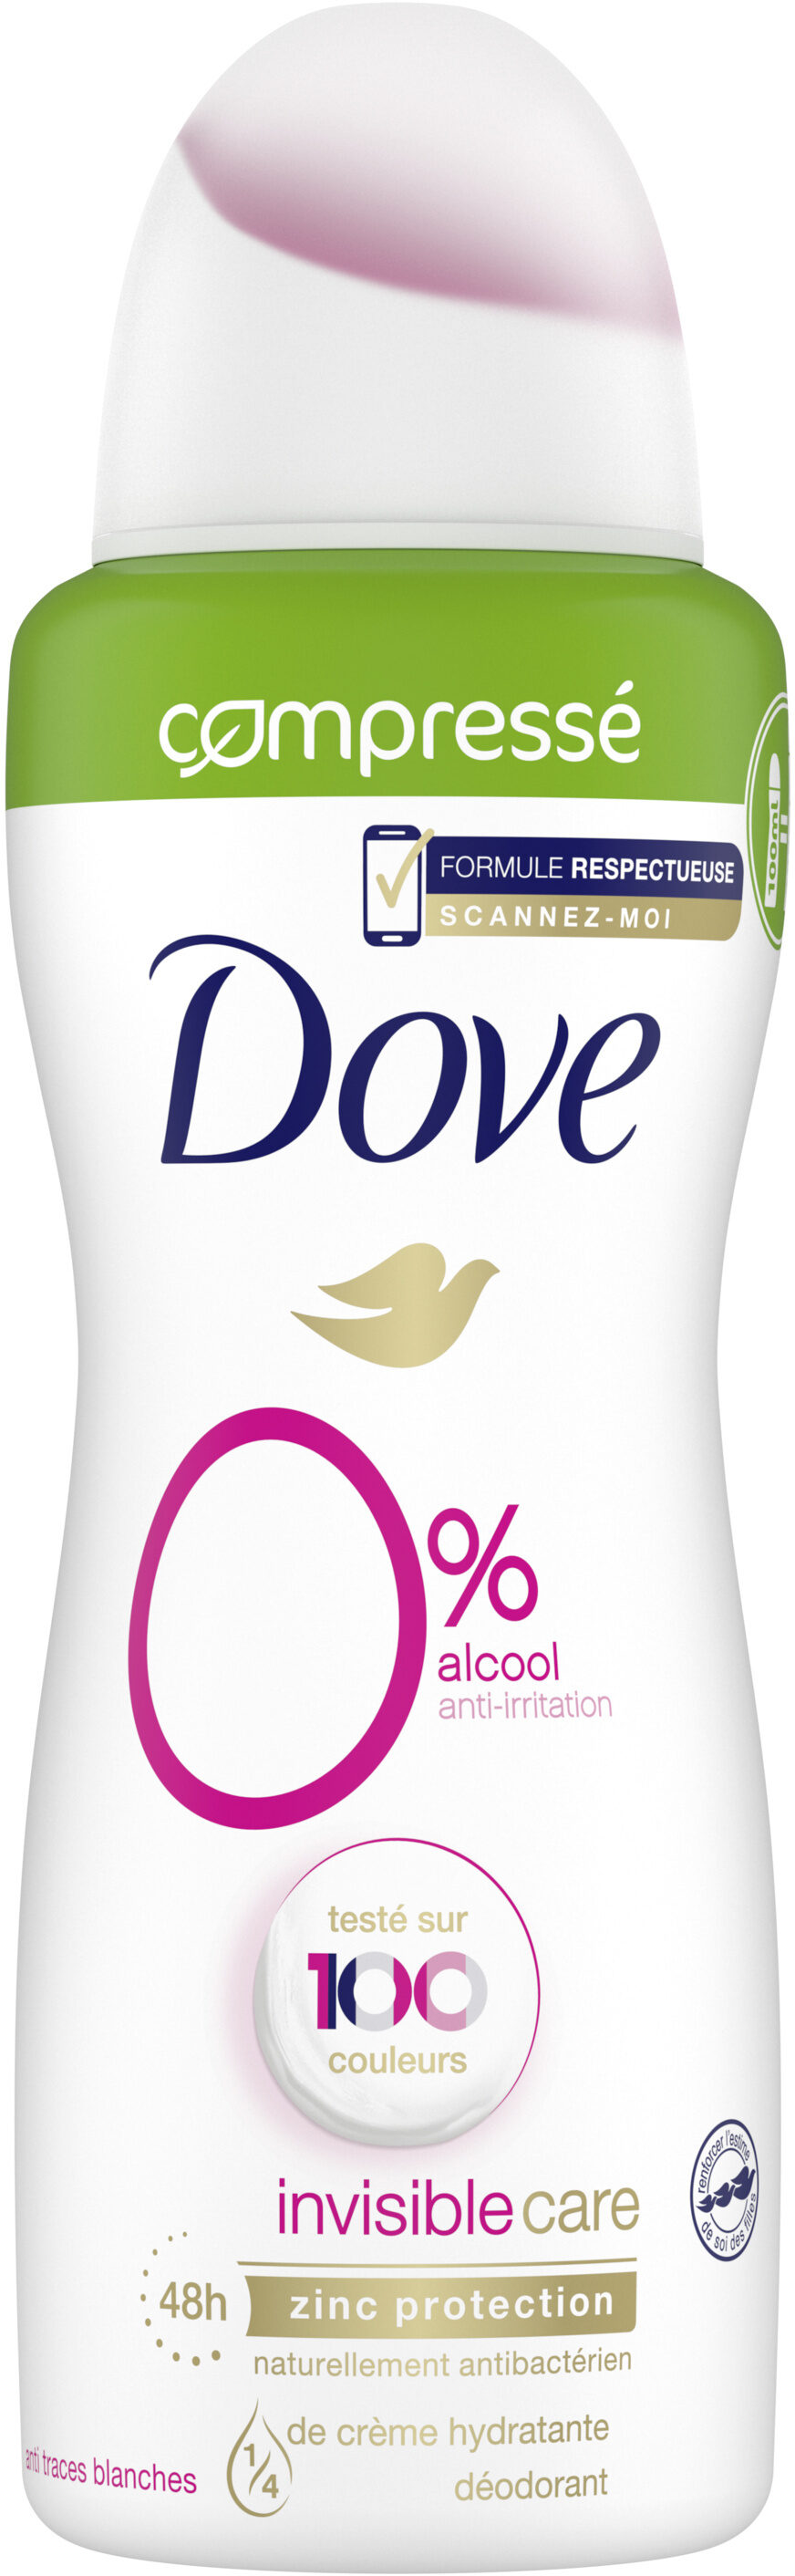 DOVE Déodorant Femme Spray Anti-irritation Invisible Care 100ml - Produit - fr